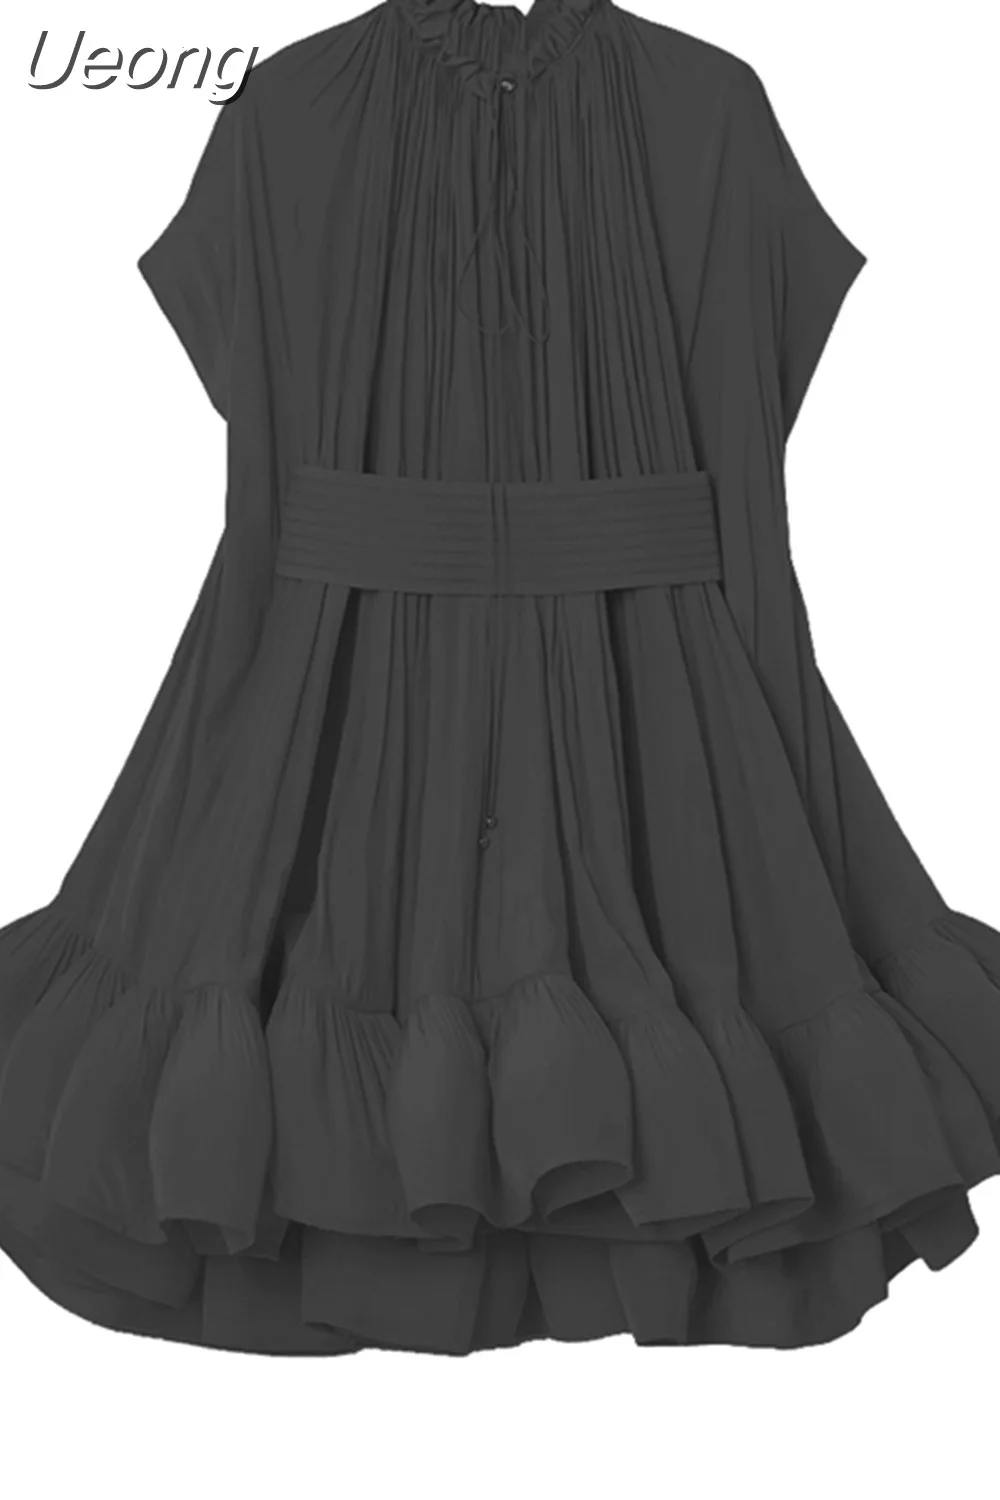 Ueong Asymmetrical Solid Mini Dresses For Women Round Neck Short Sleeve High Waist Spliced Plieasted A Line Dress Female Summer